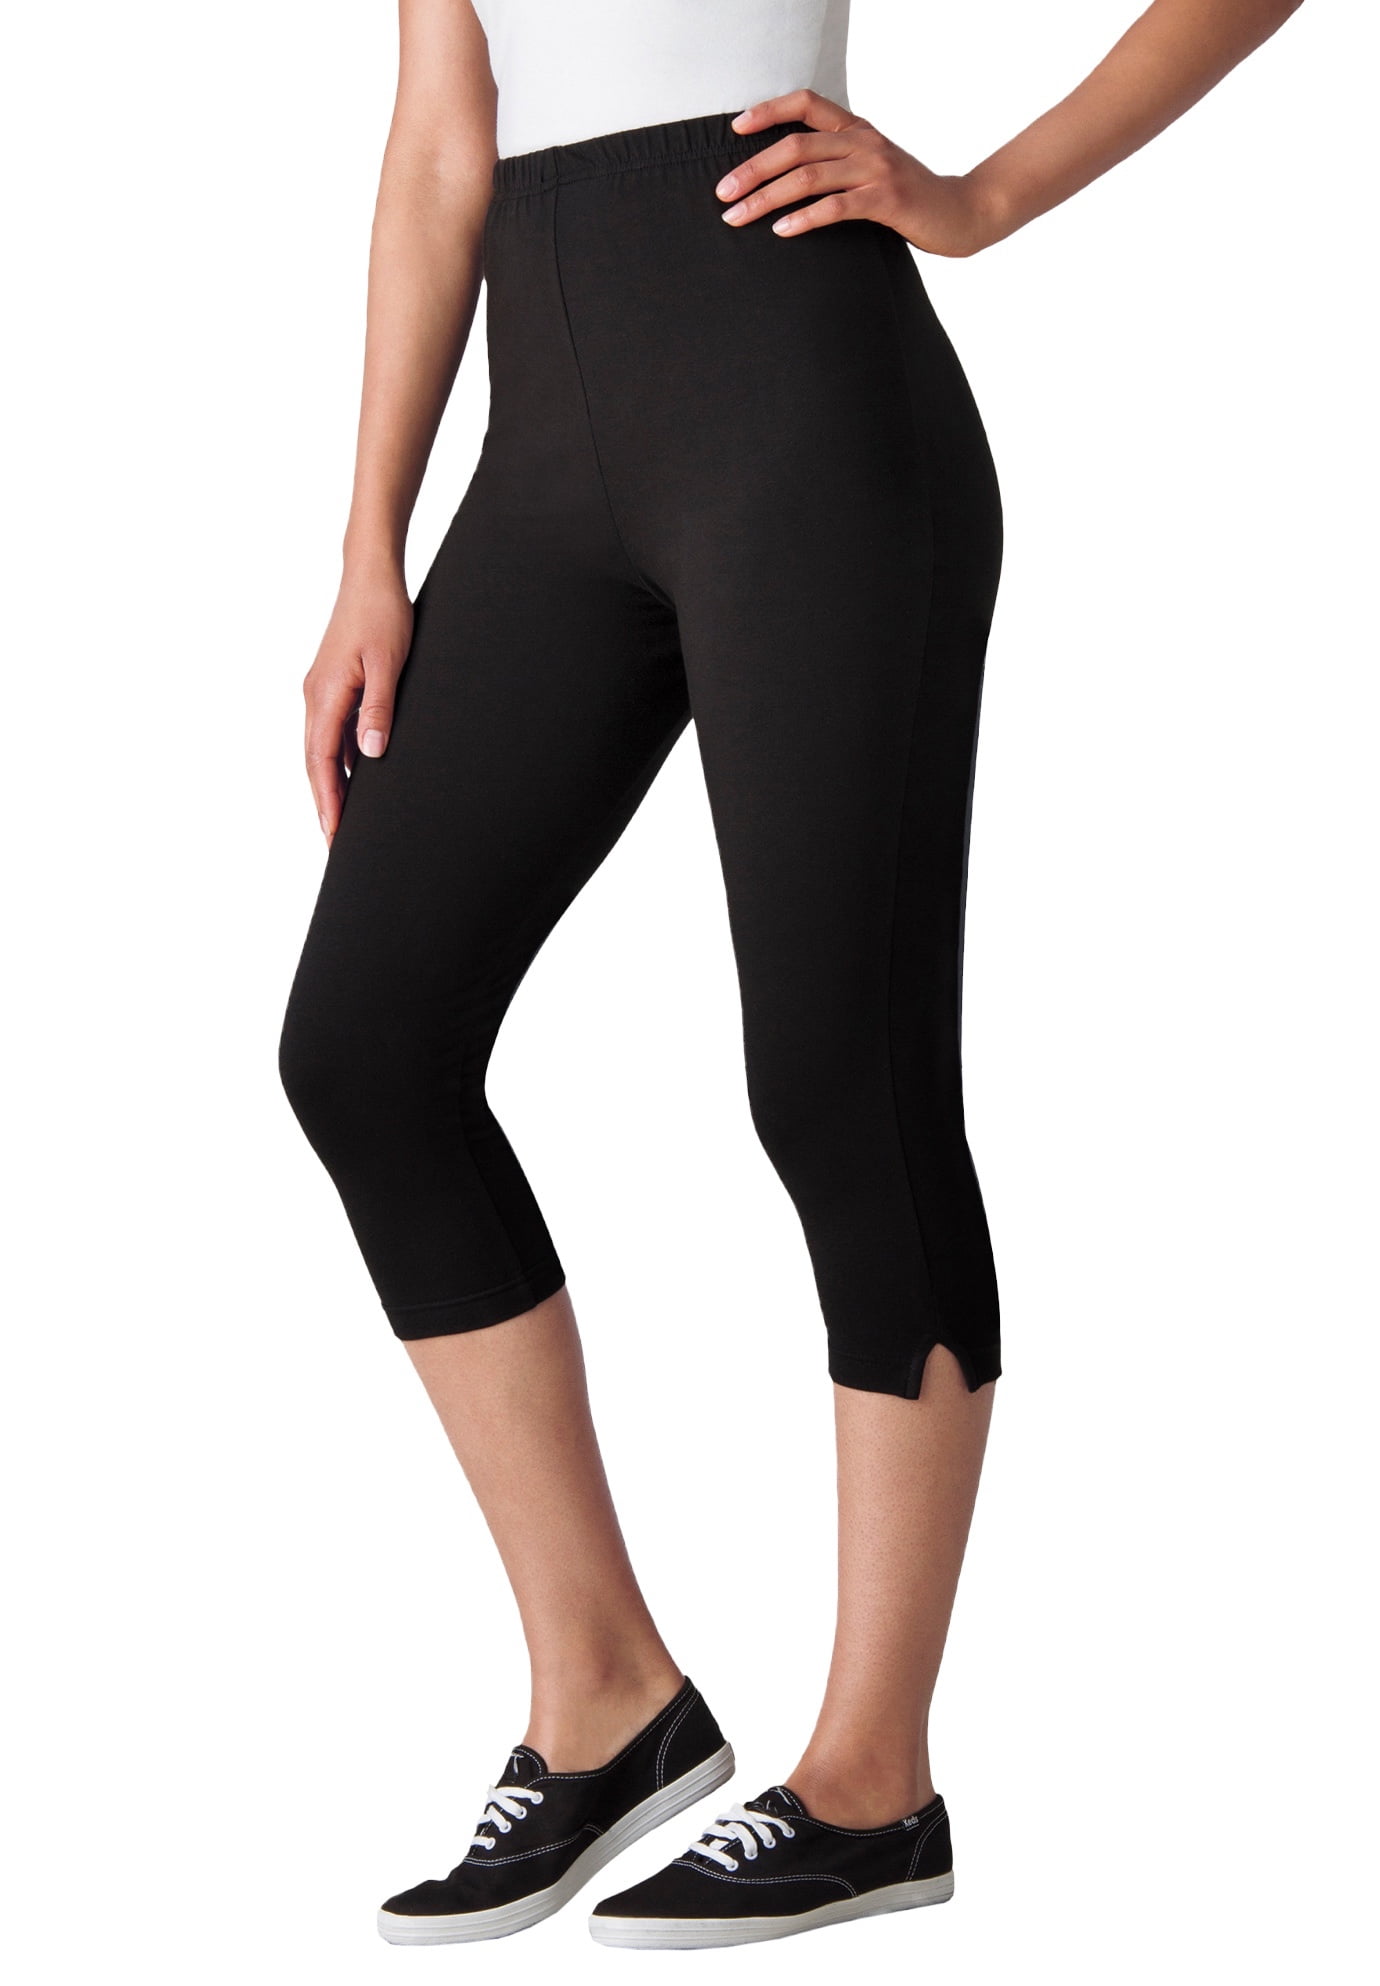 Capri Regular and Plus Size Shorts Premium Stretch Jersey Cotton Leggings for Women Full 